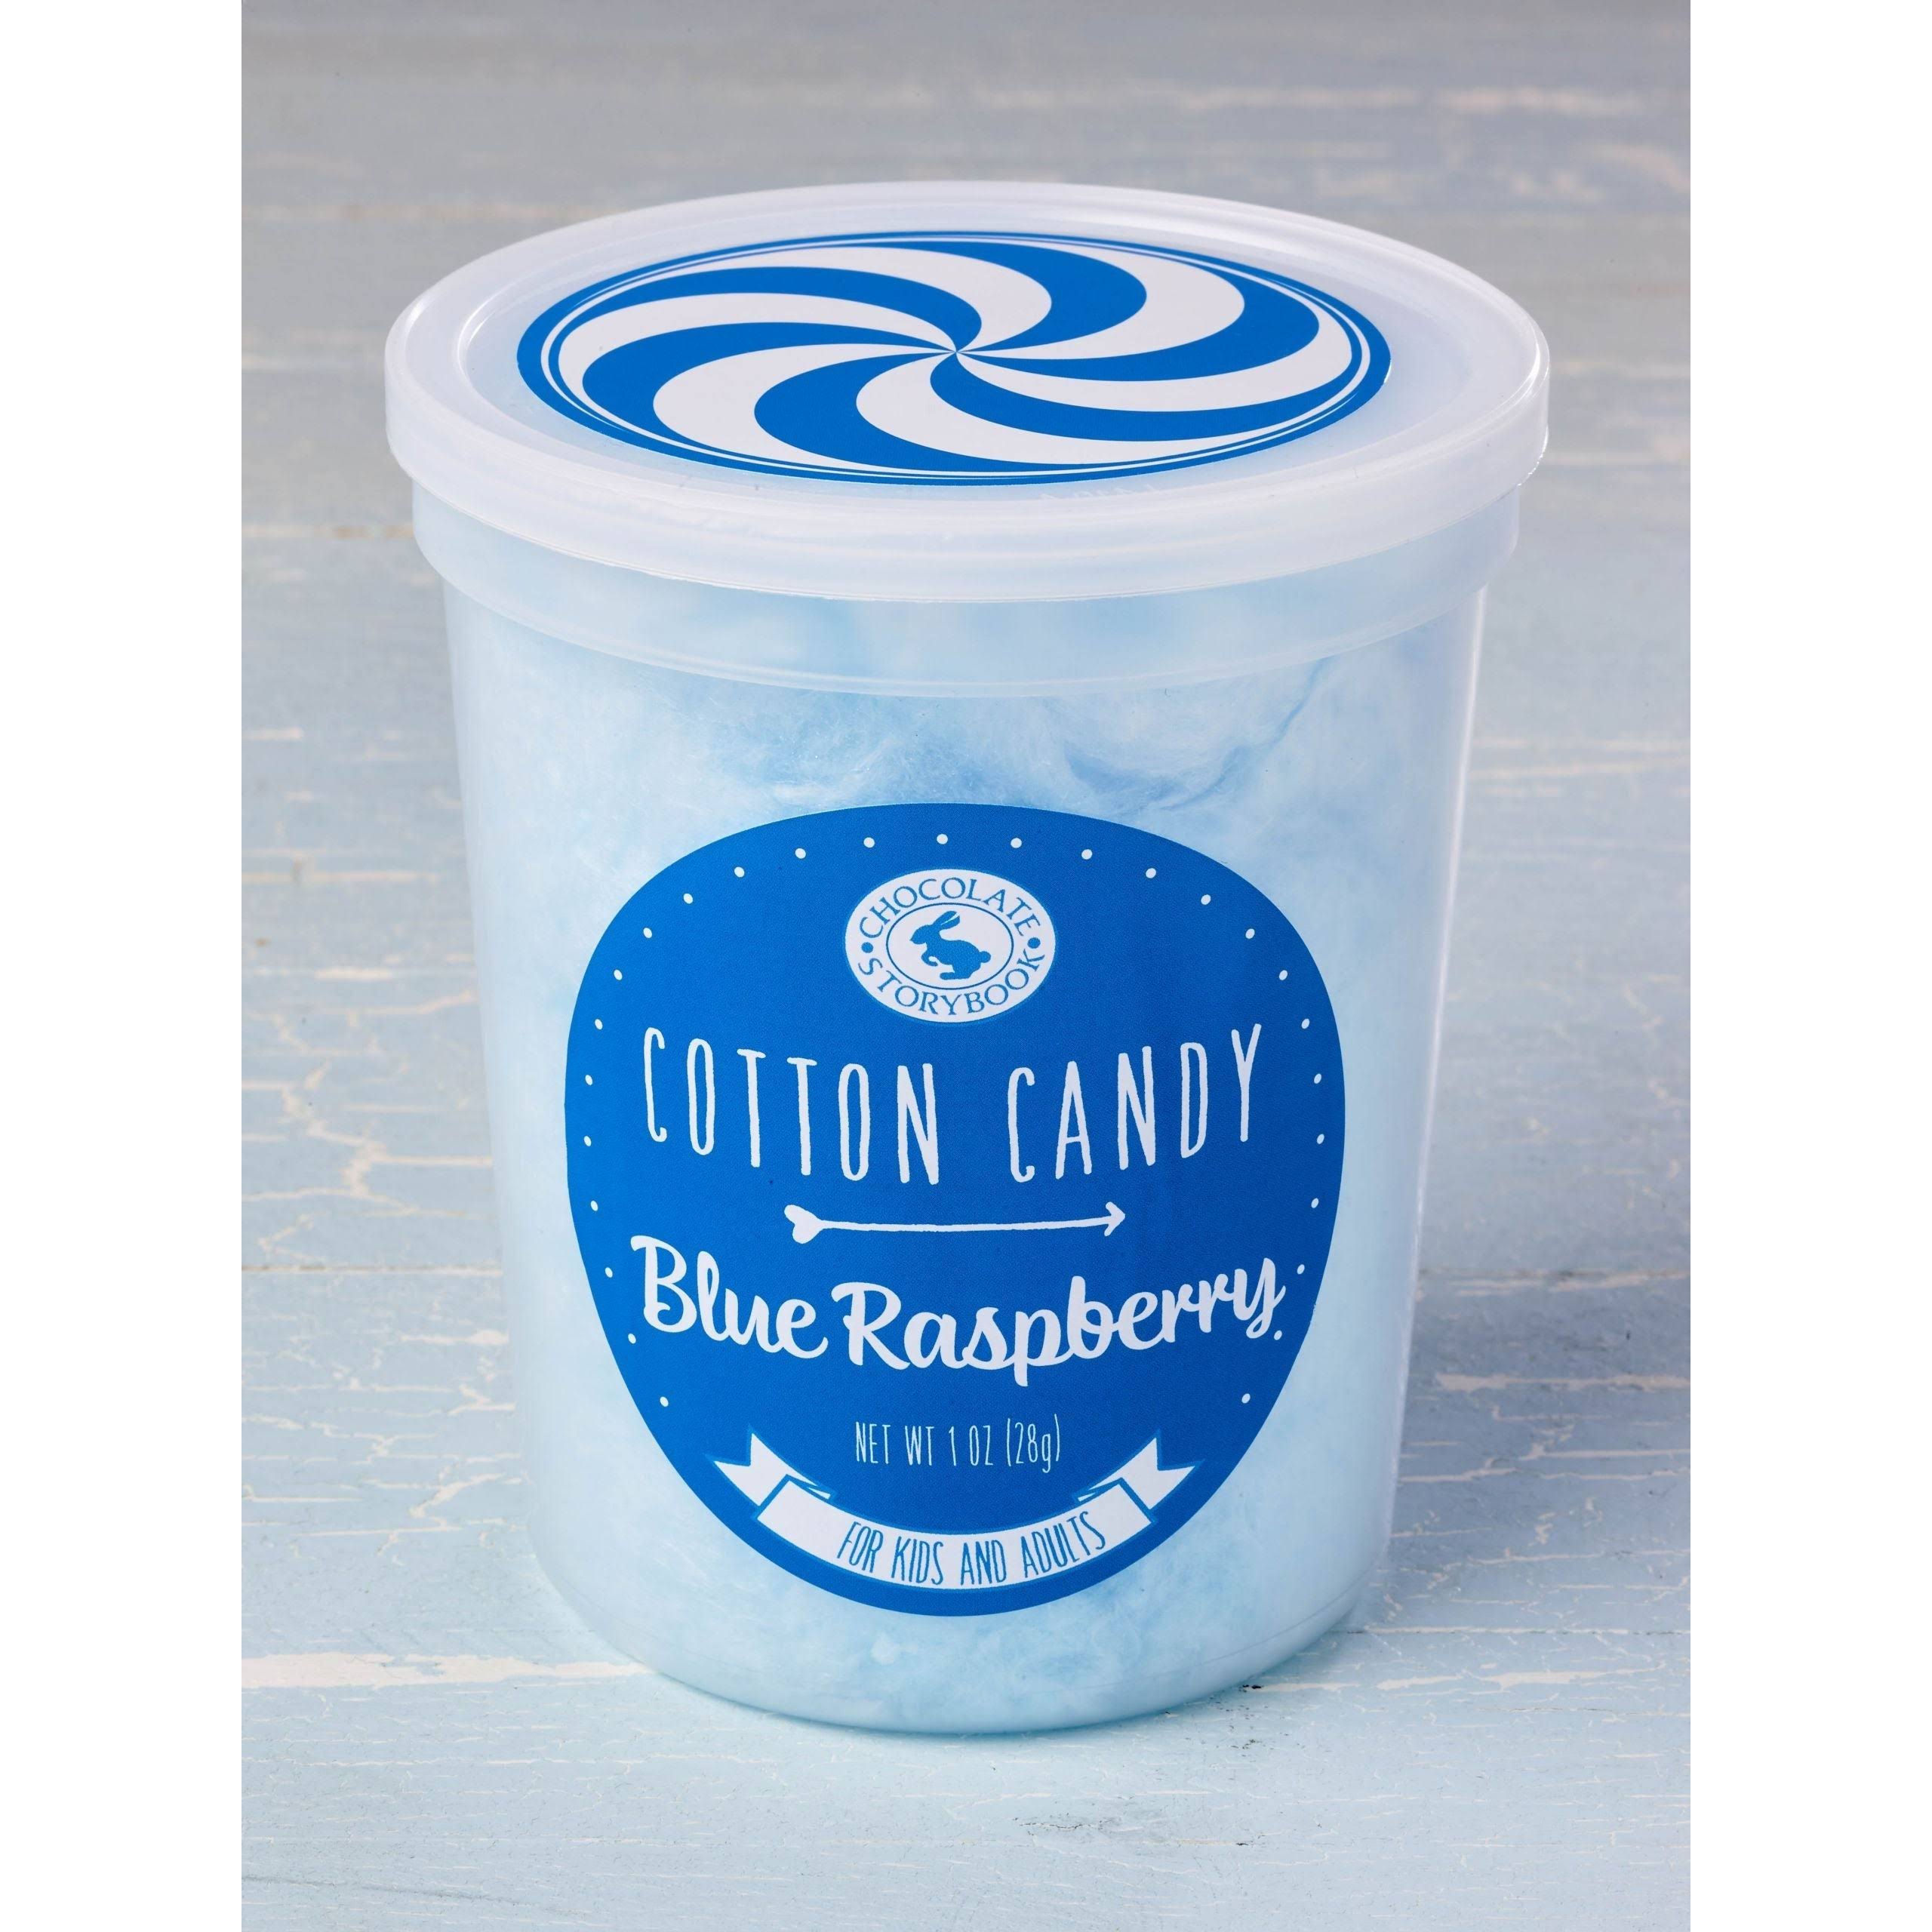 Blue Raspberry Cotton Candy